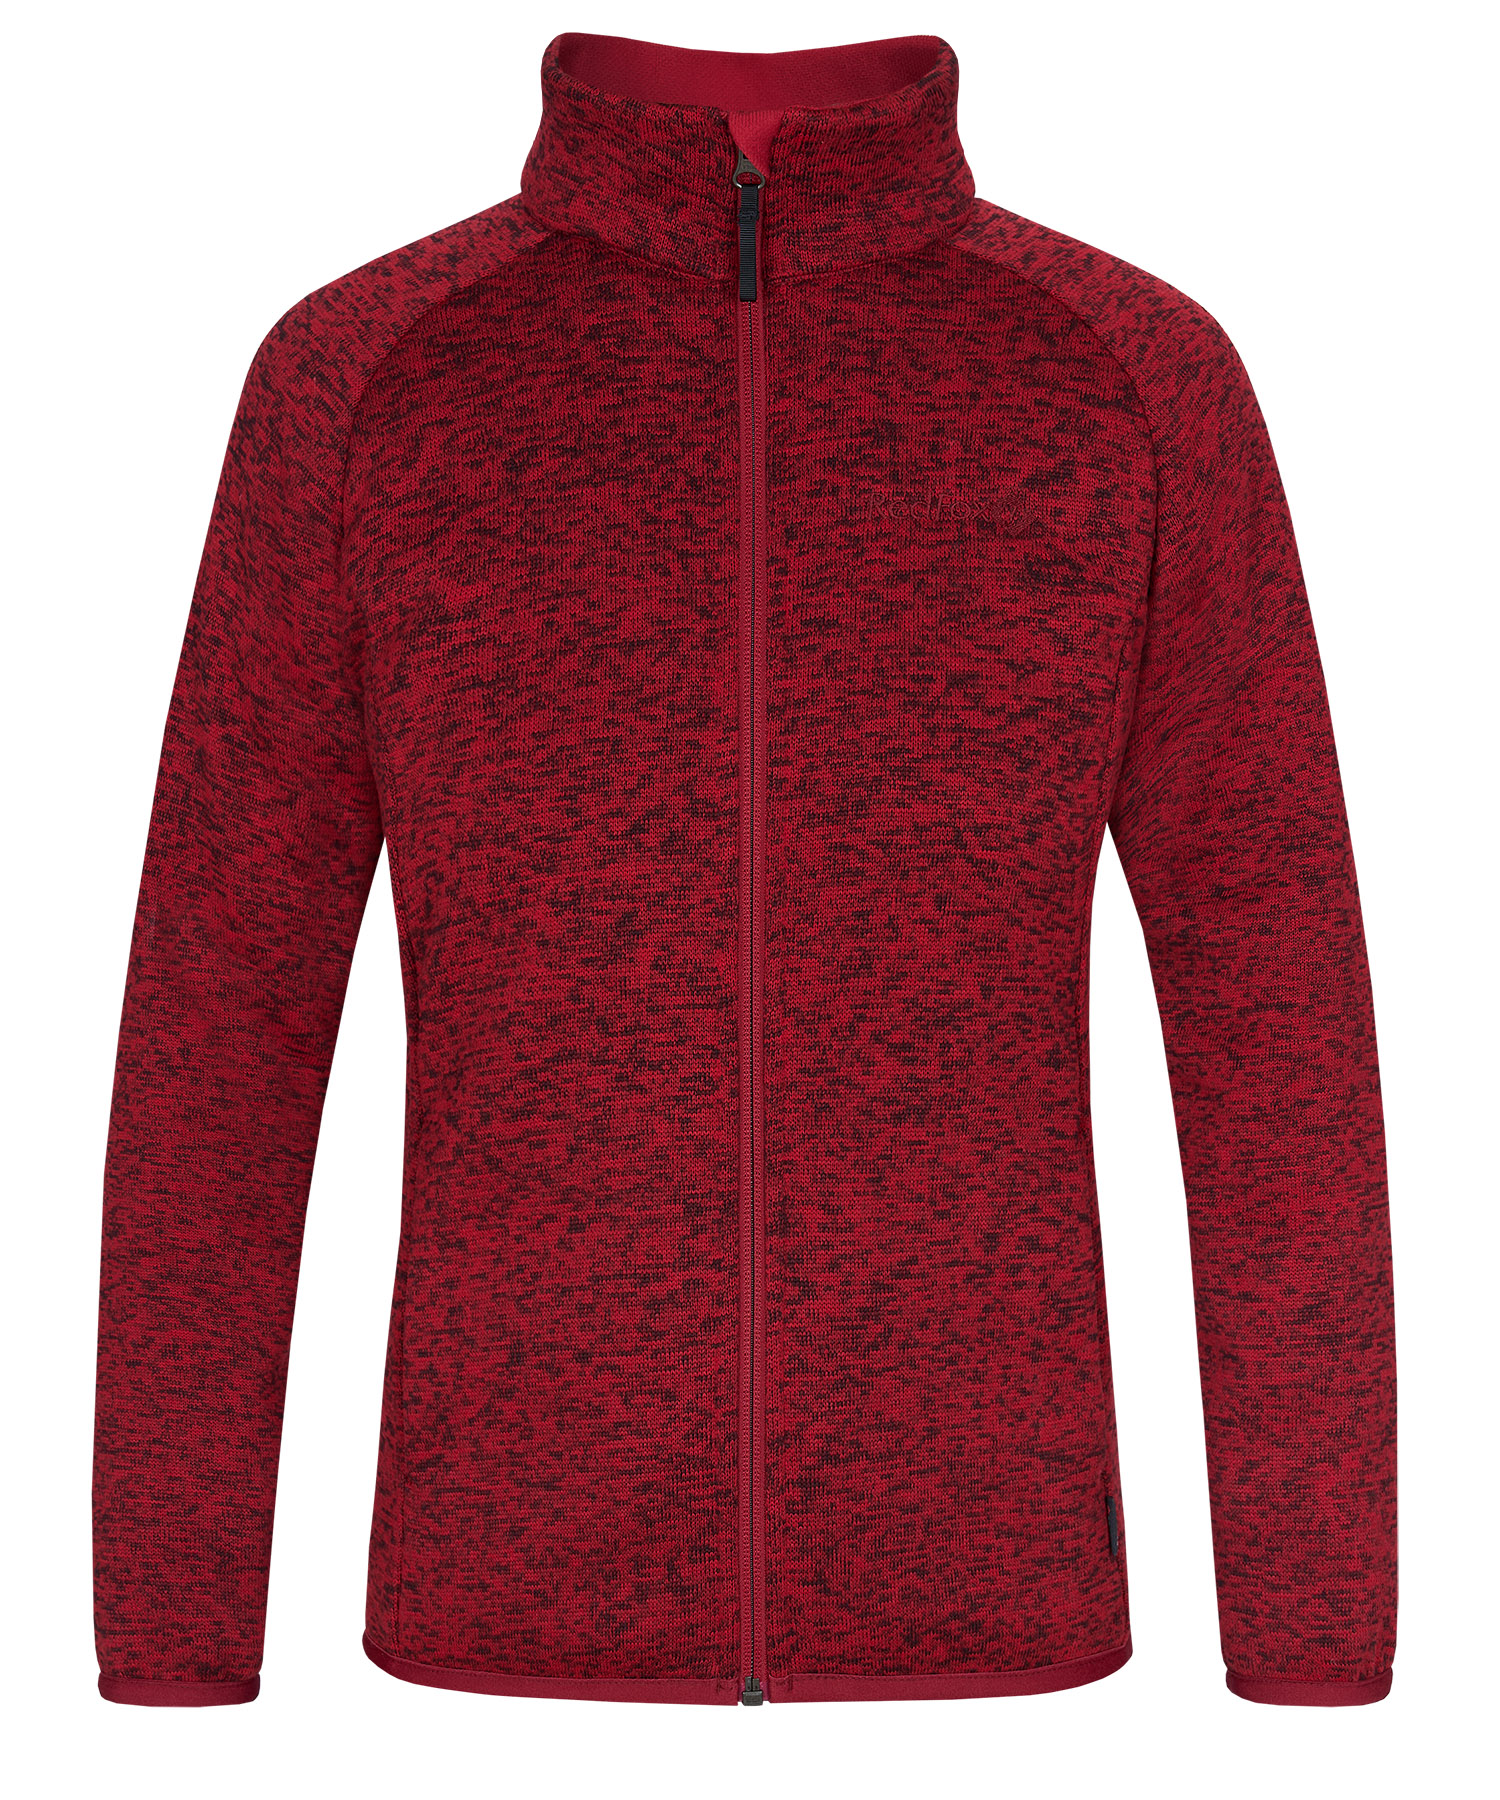 Куртка Sherpa Женская Red Fox, цвет темно-красный, размер 50